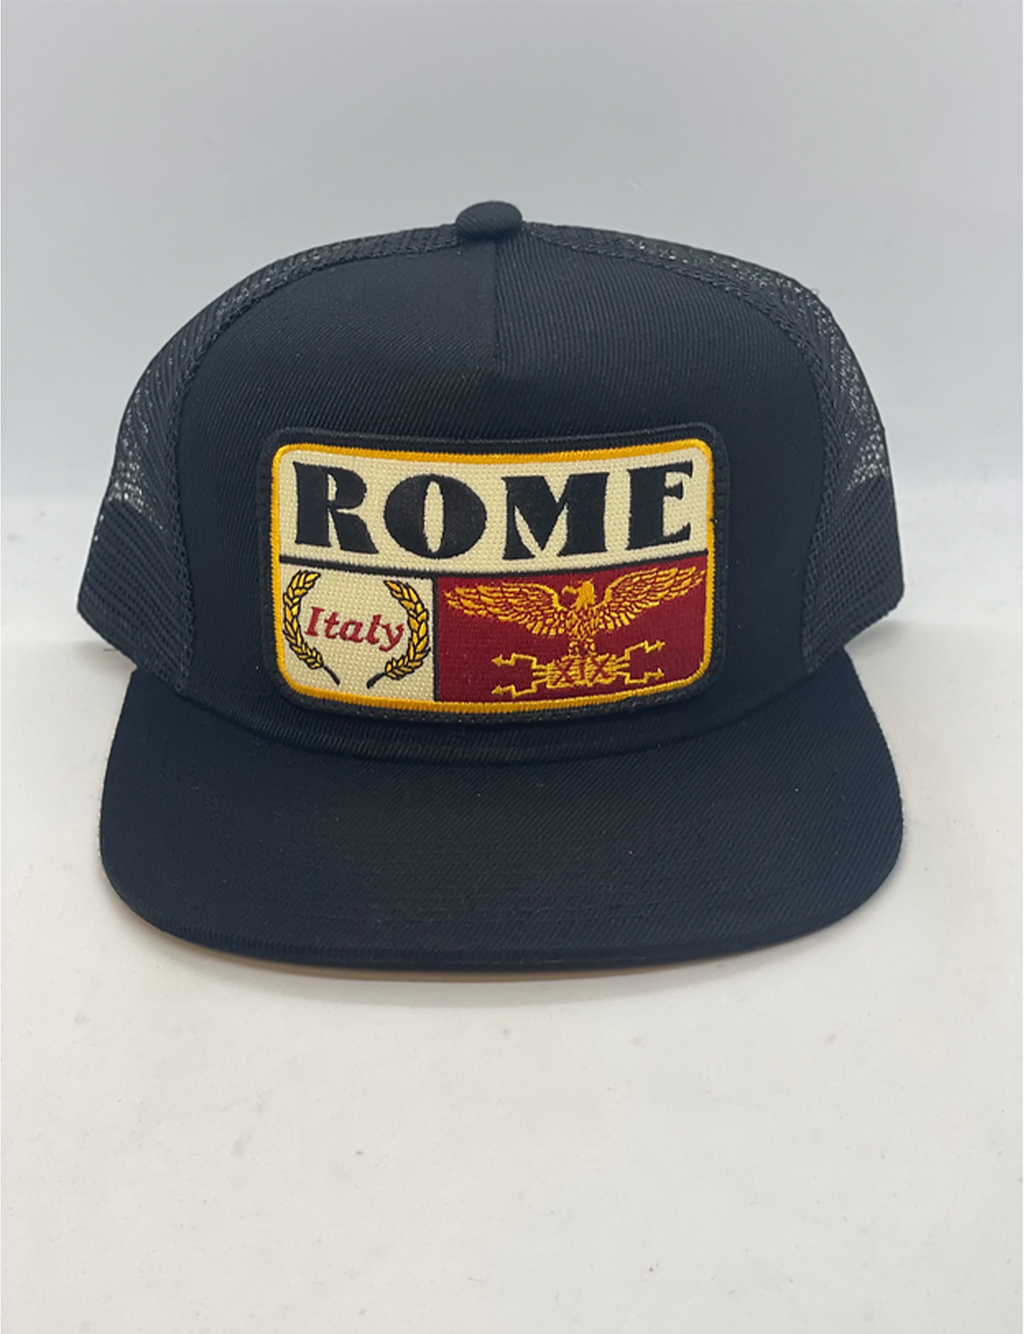 Trucker Hat, Rome